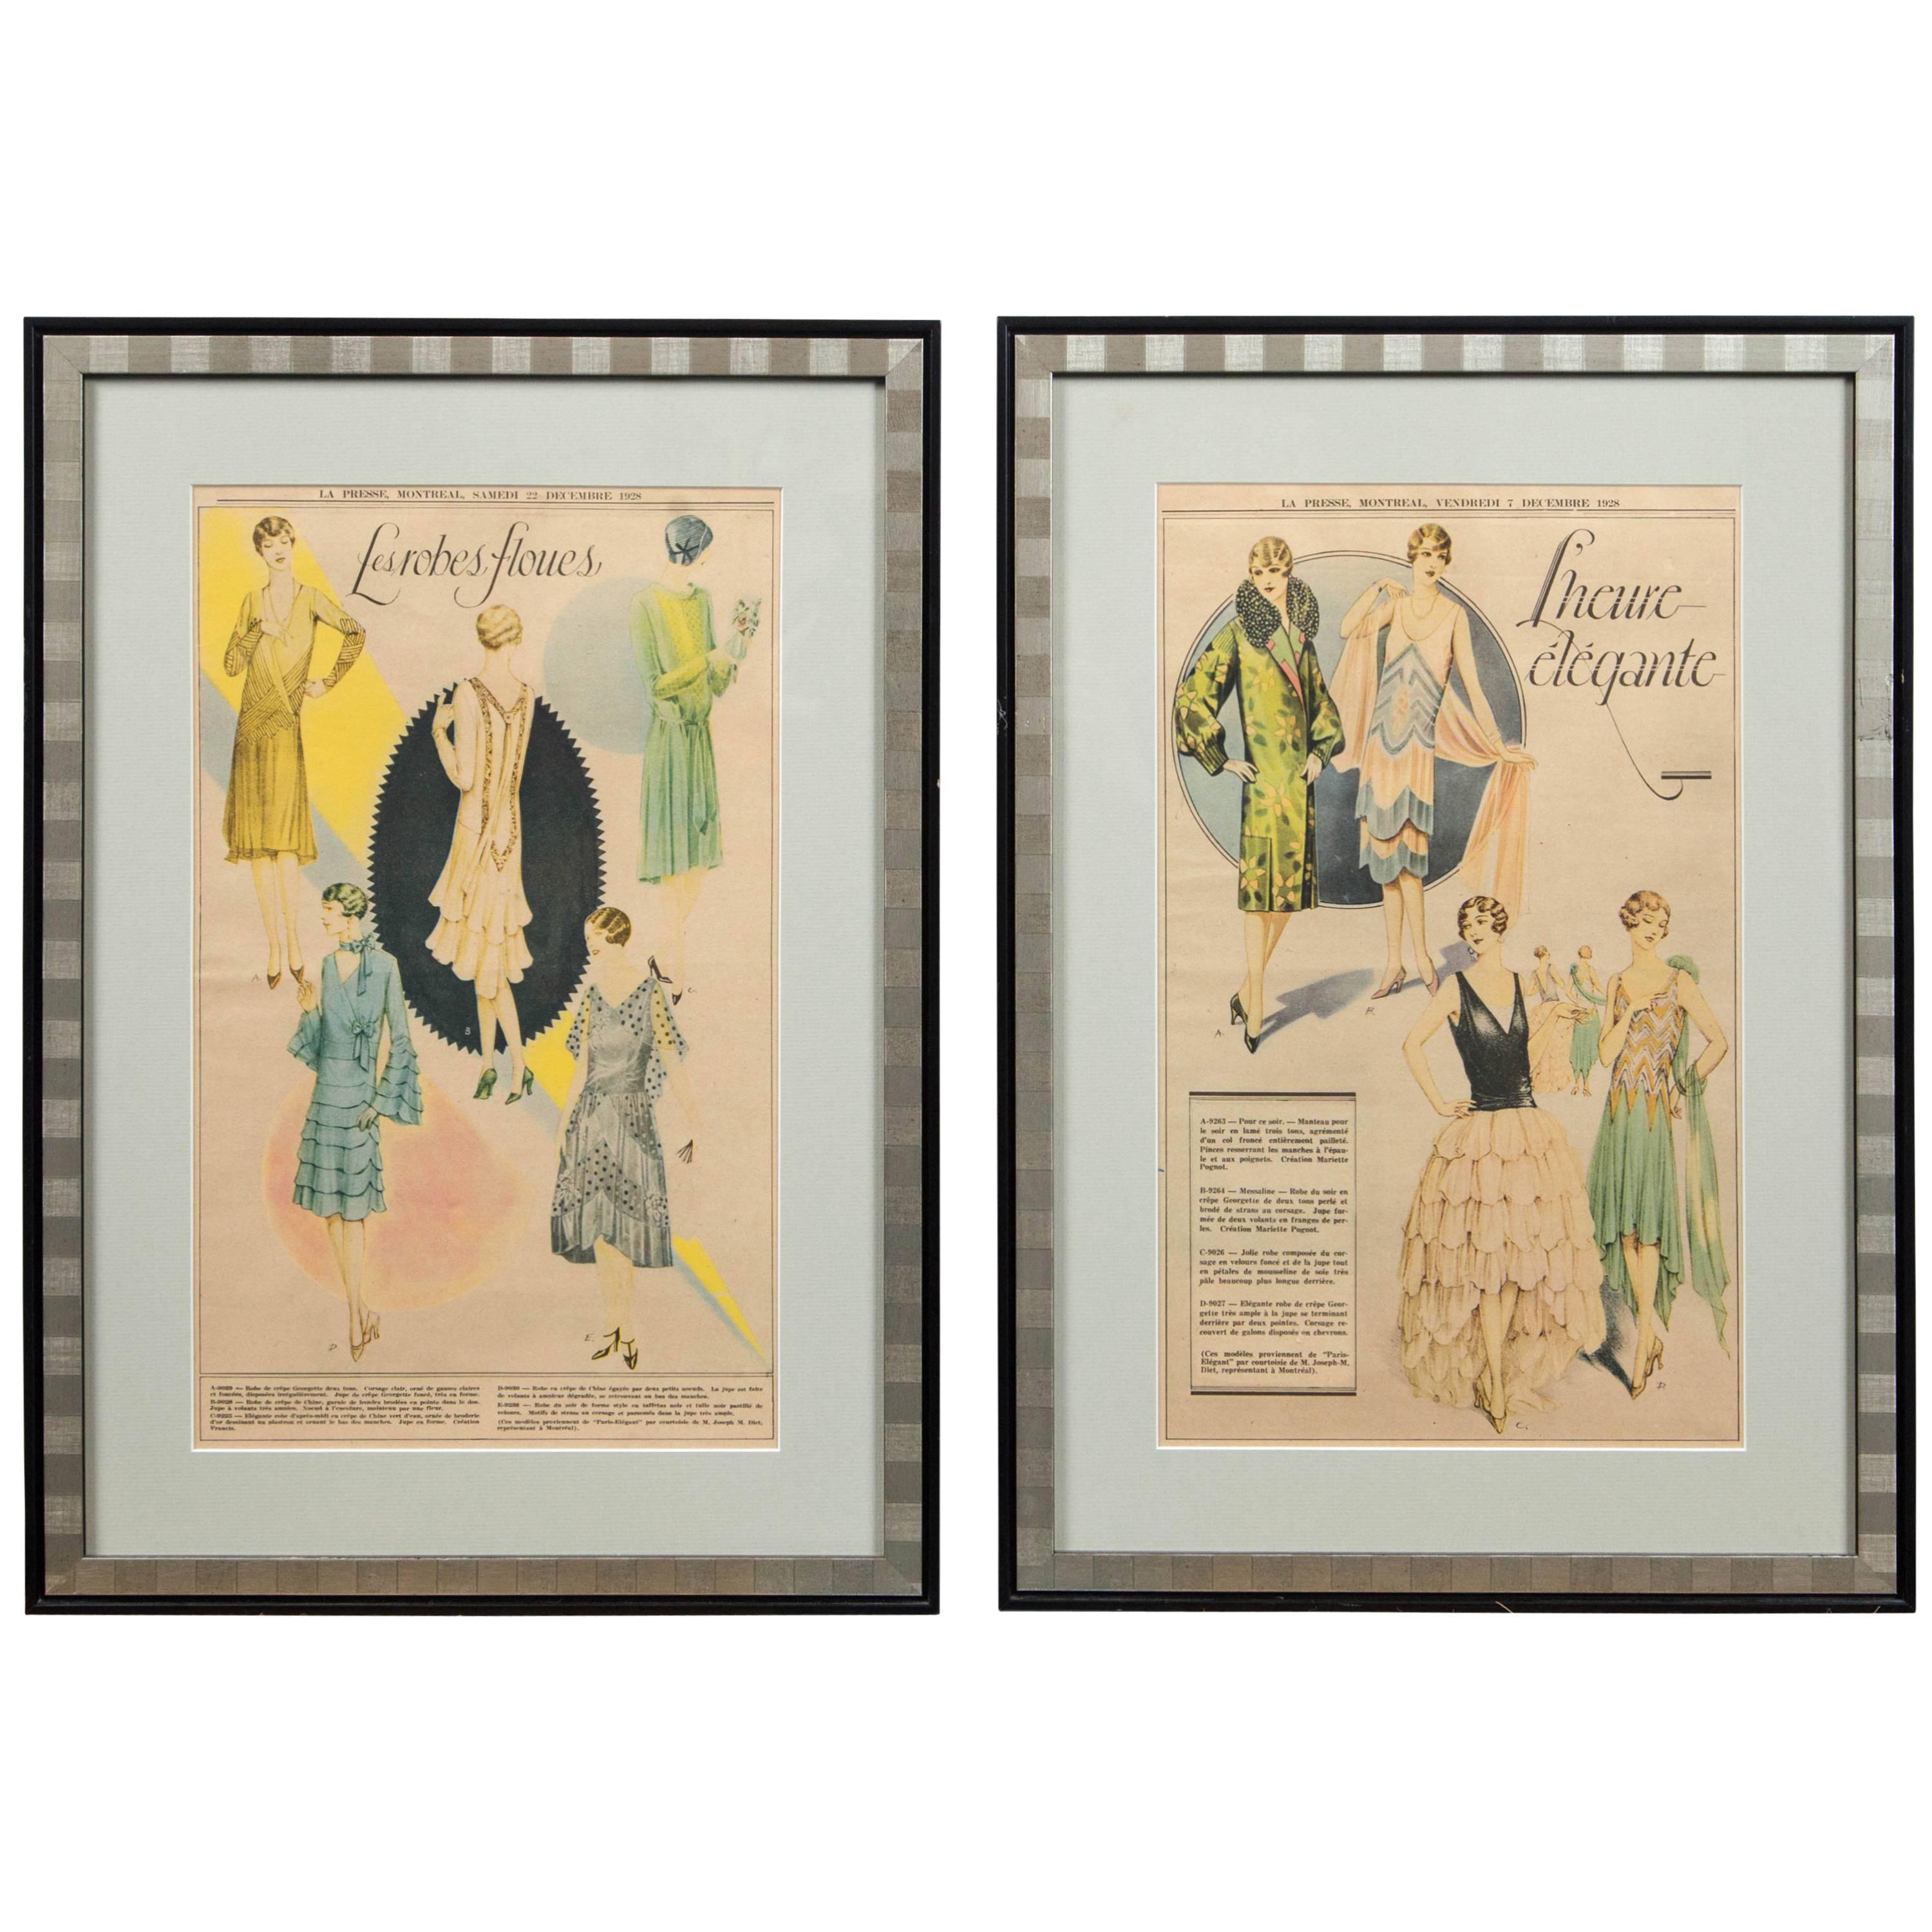 Pair of Vintage Fashion Advertisements, La Presse Montreal, 1928